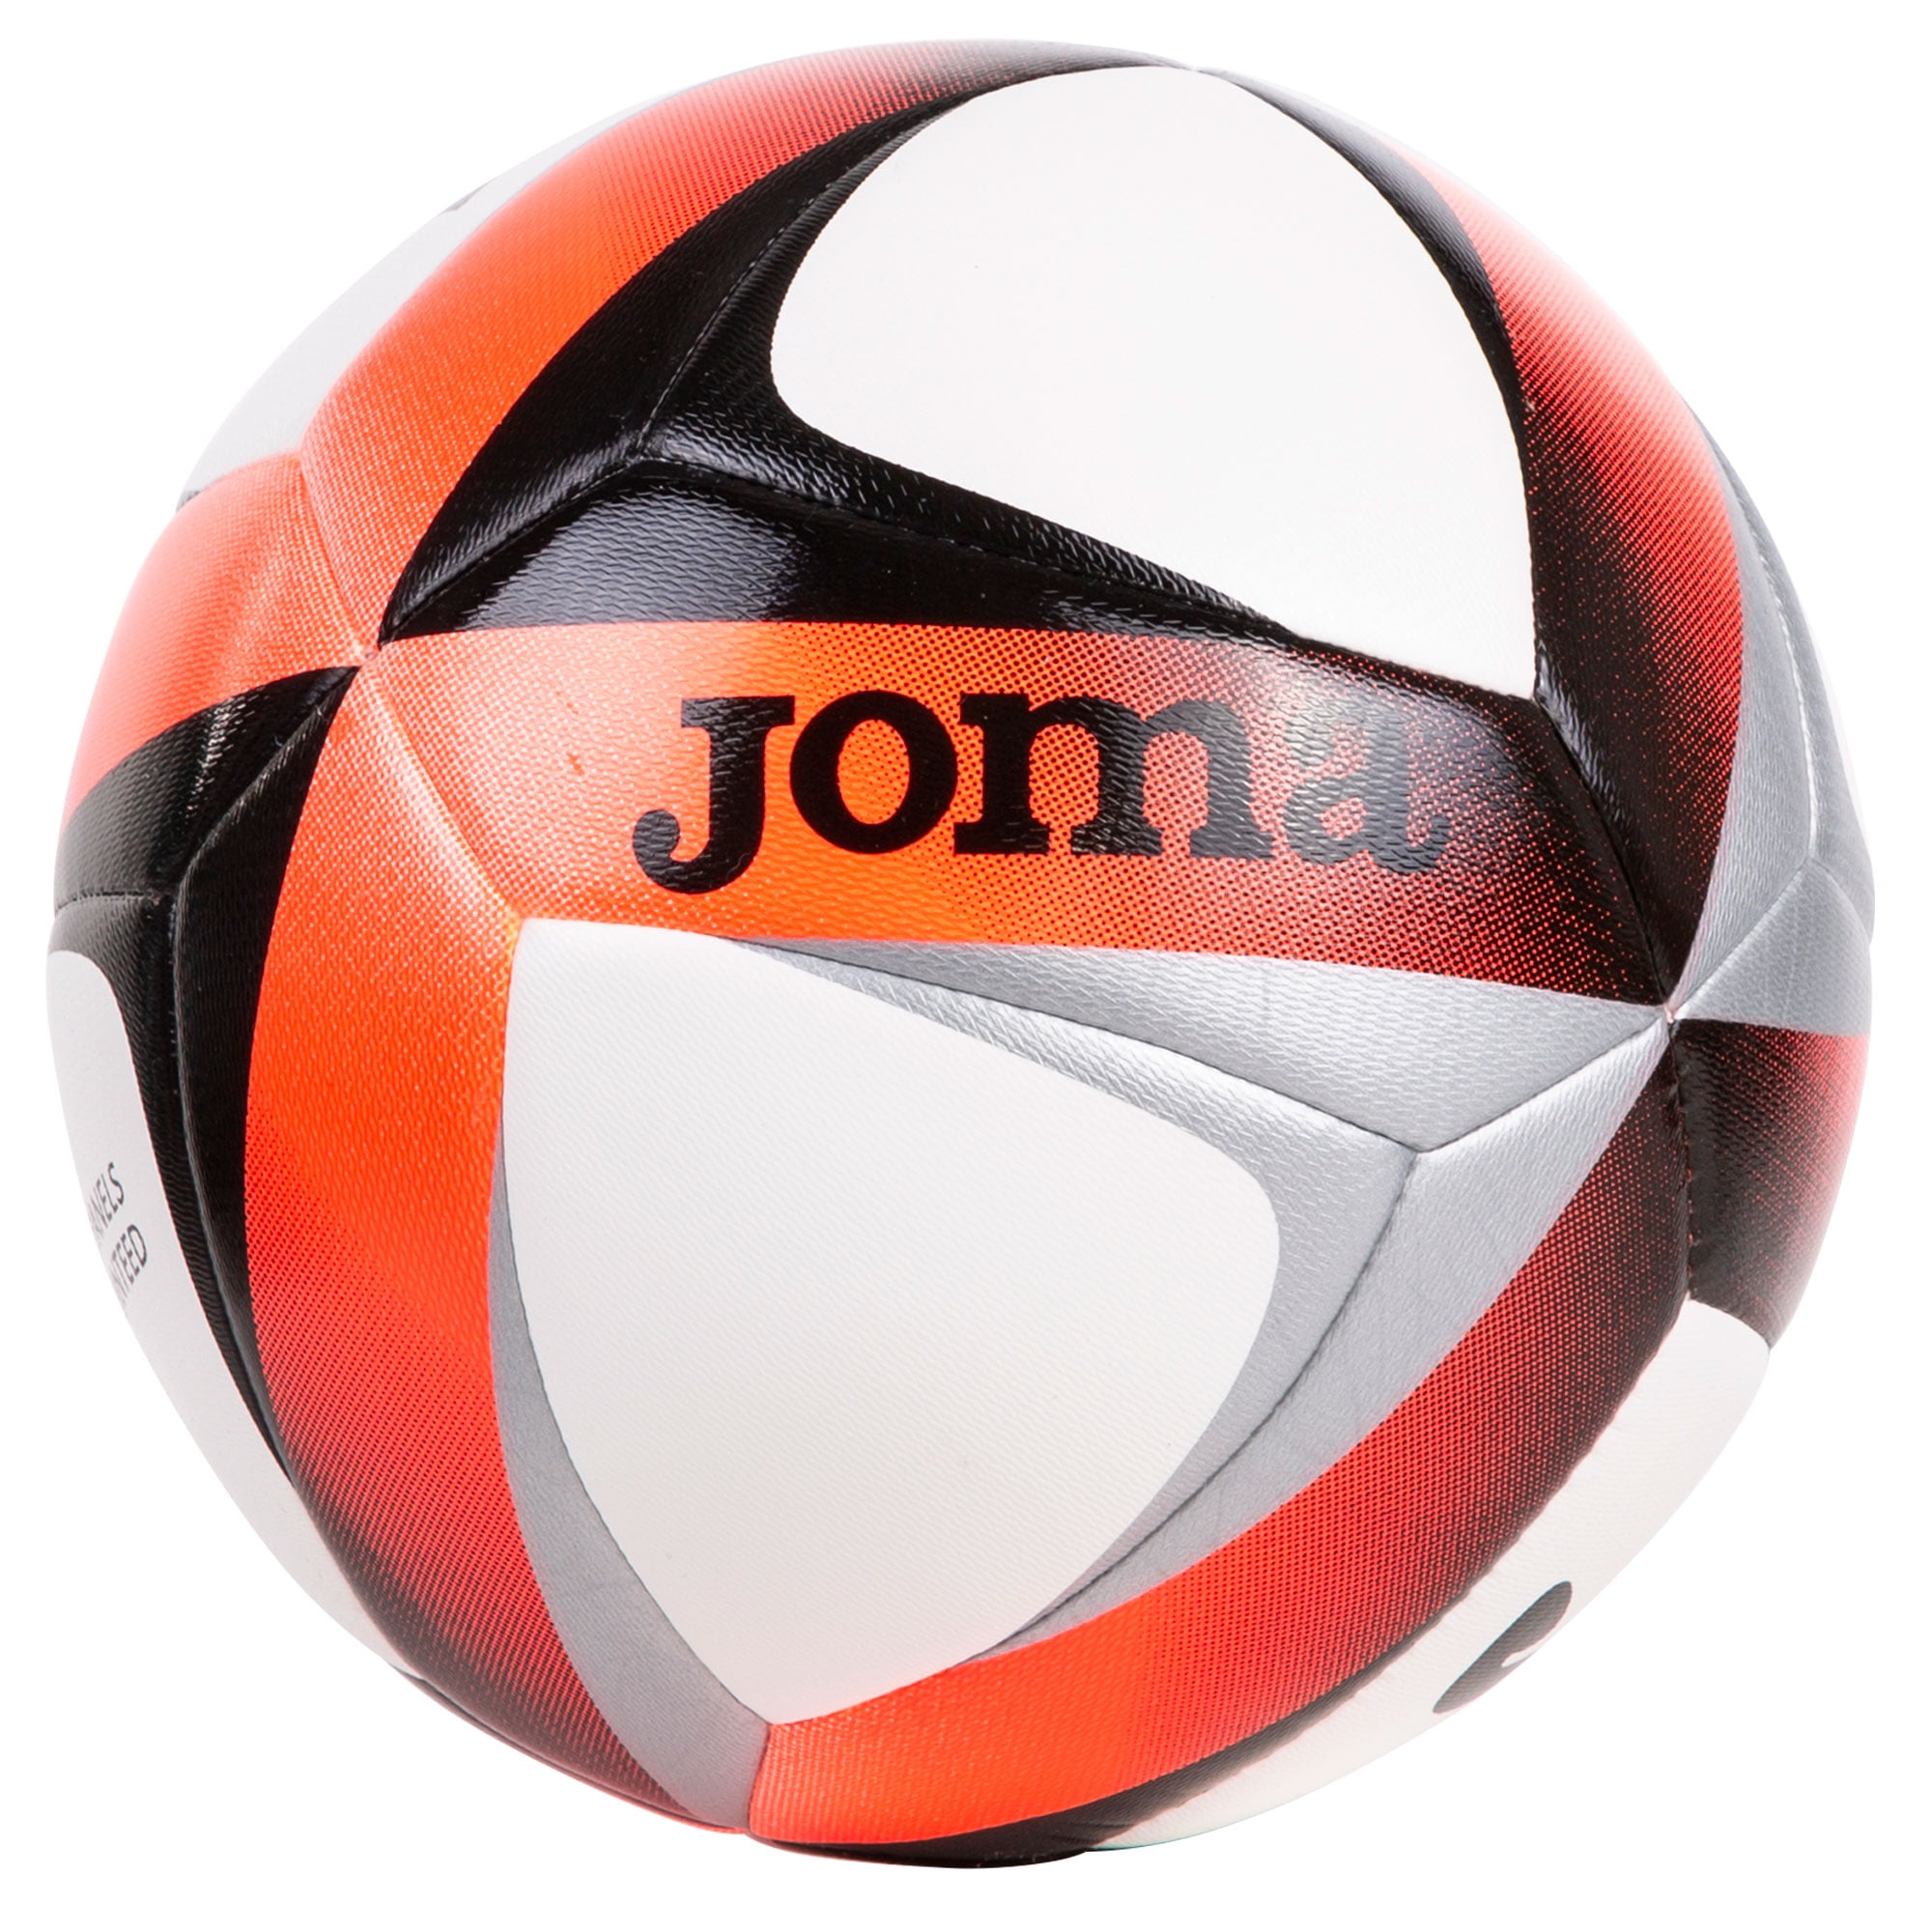 Joma Futsal Jr Orange. Size 3 (a.k.a Junior Size). - Walmart.com